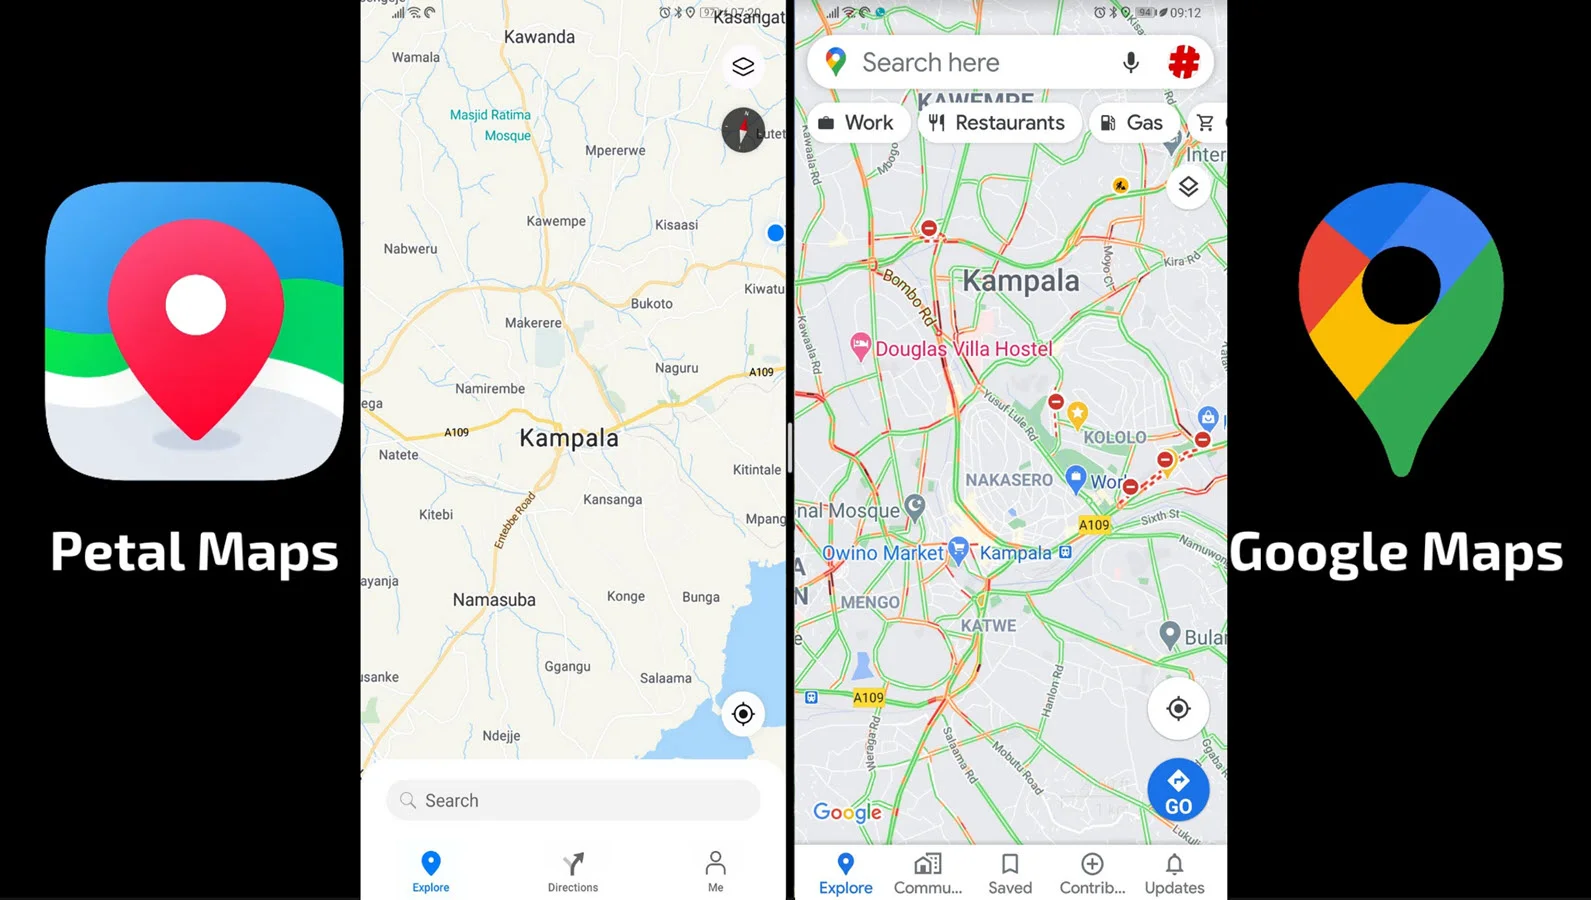 Objetivos de Huawei Petal Maps vs. objetivos Google Maps